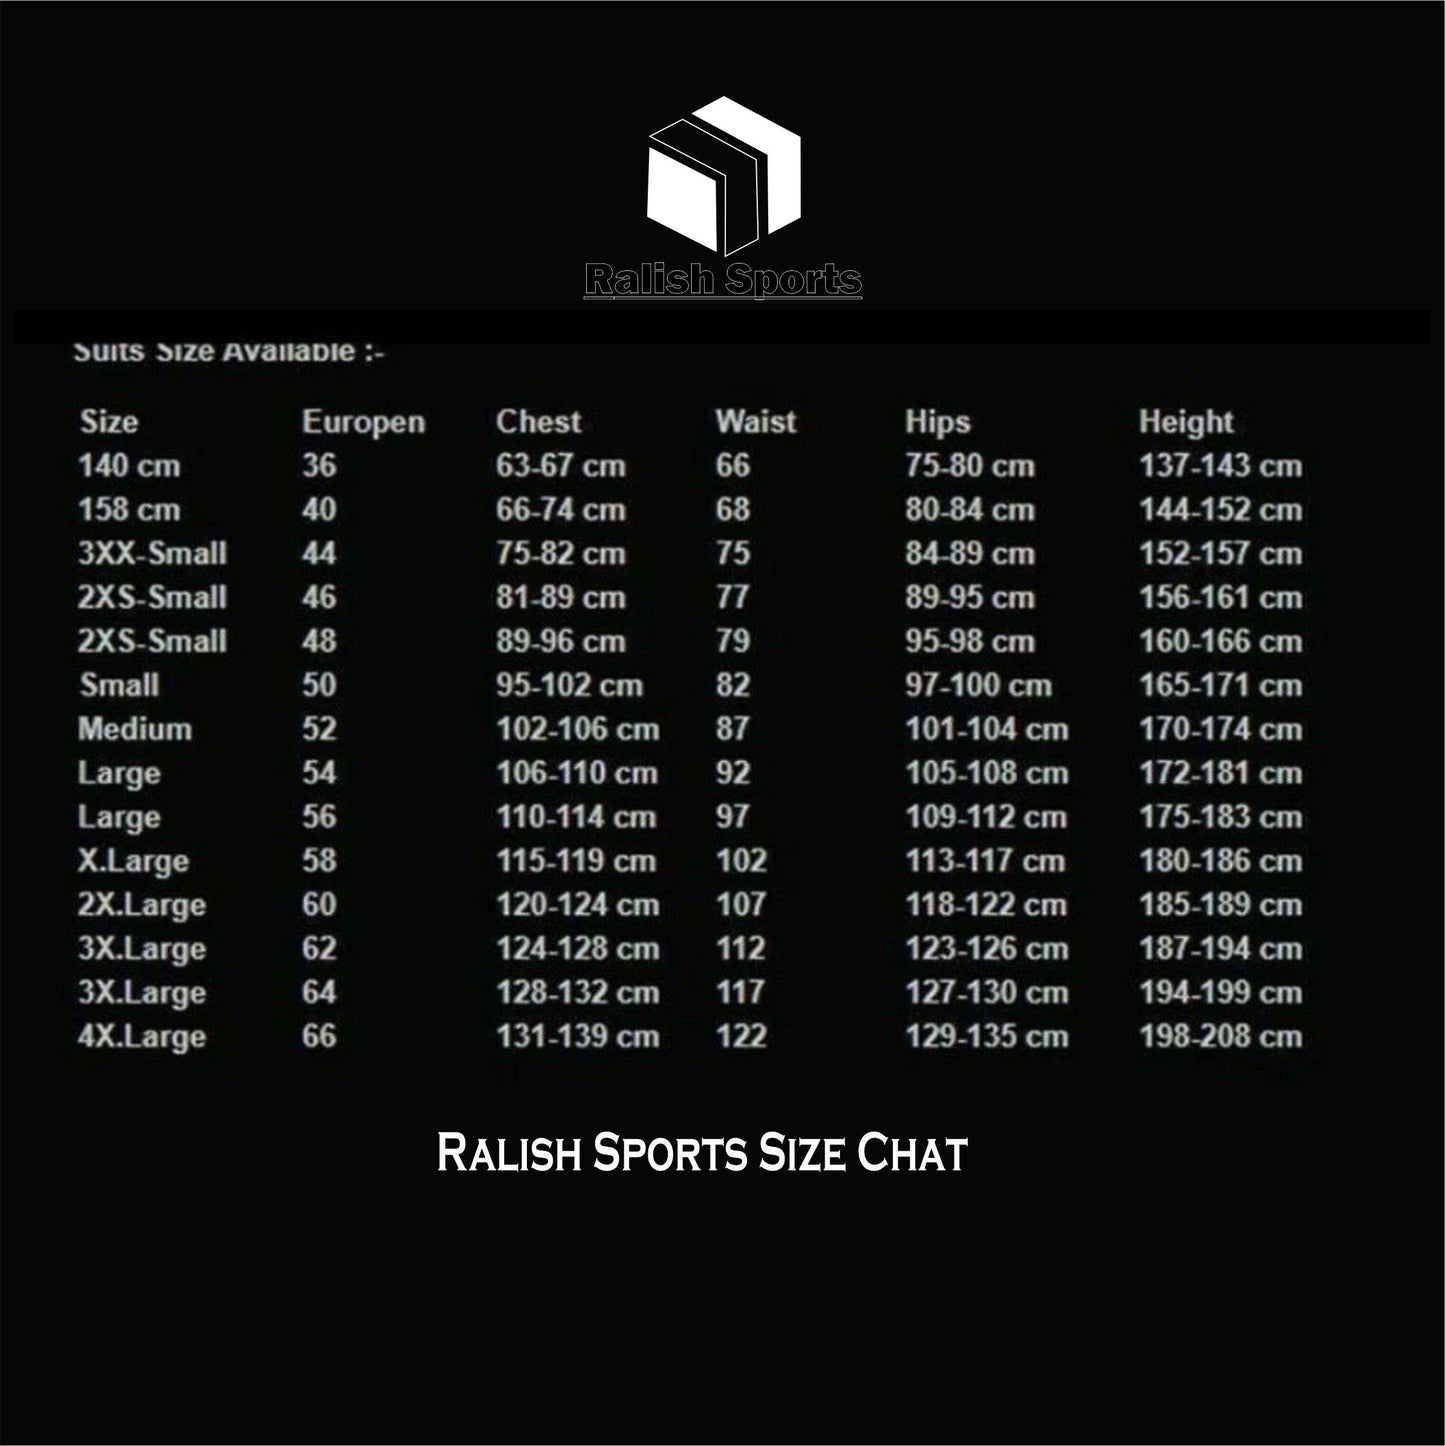 Valtteri Bottas F1 Race Suit 2018 - Ralish Sports